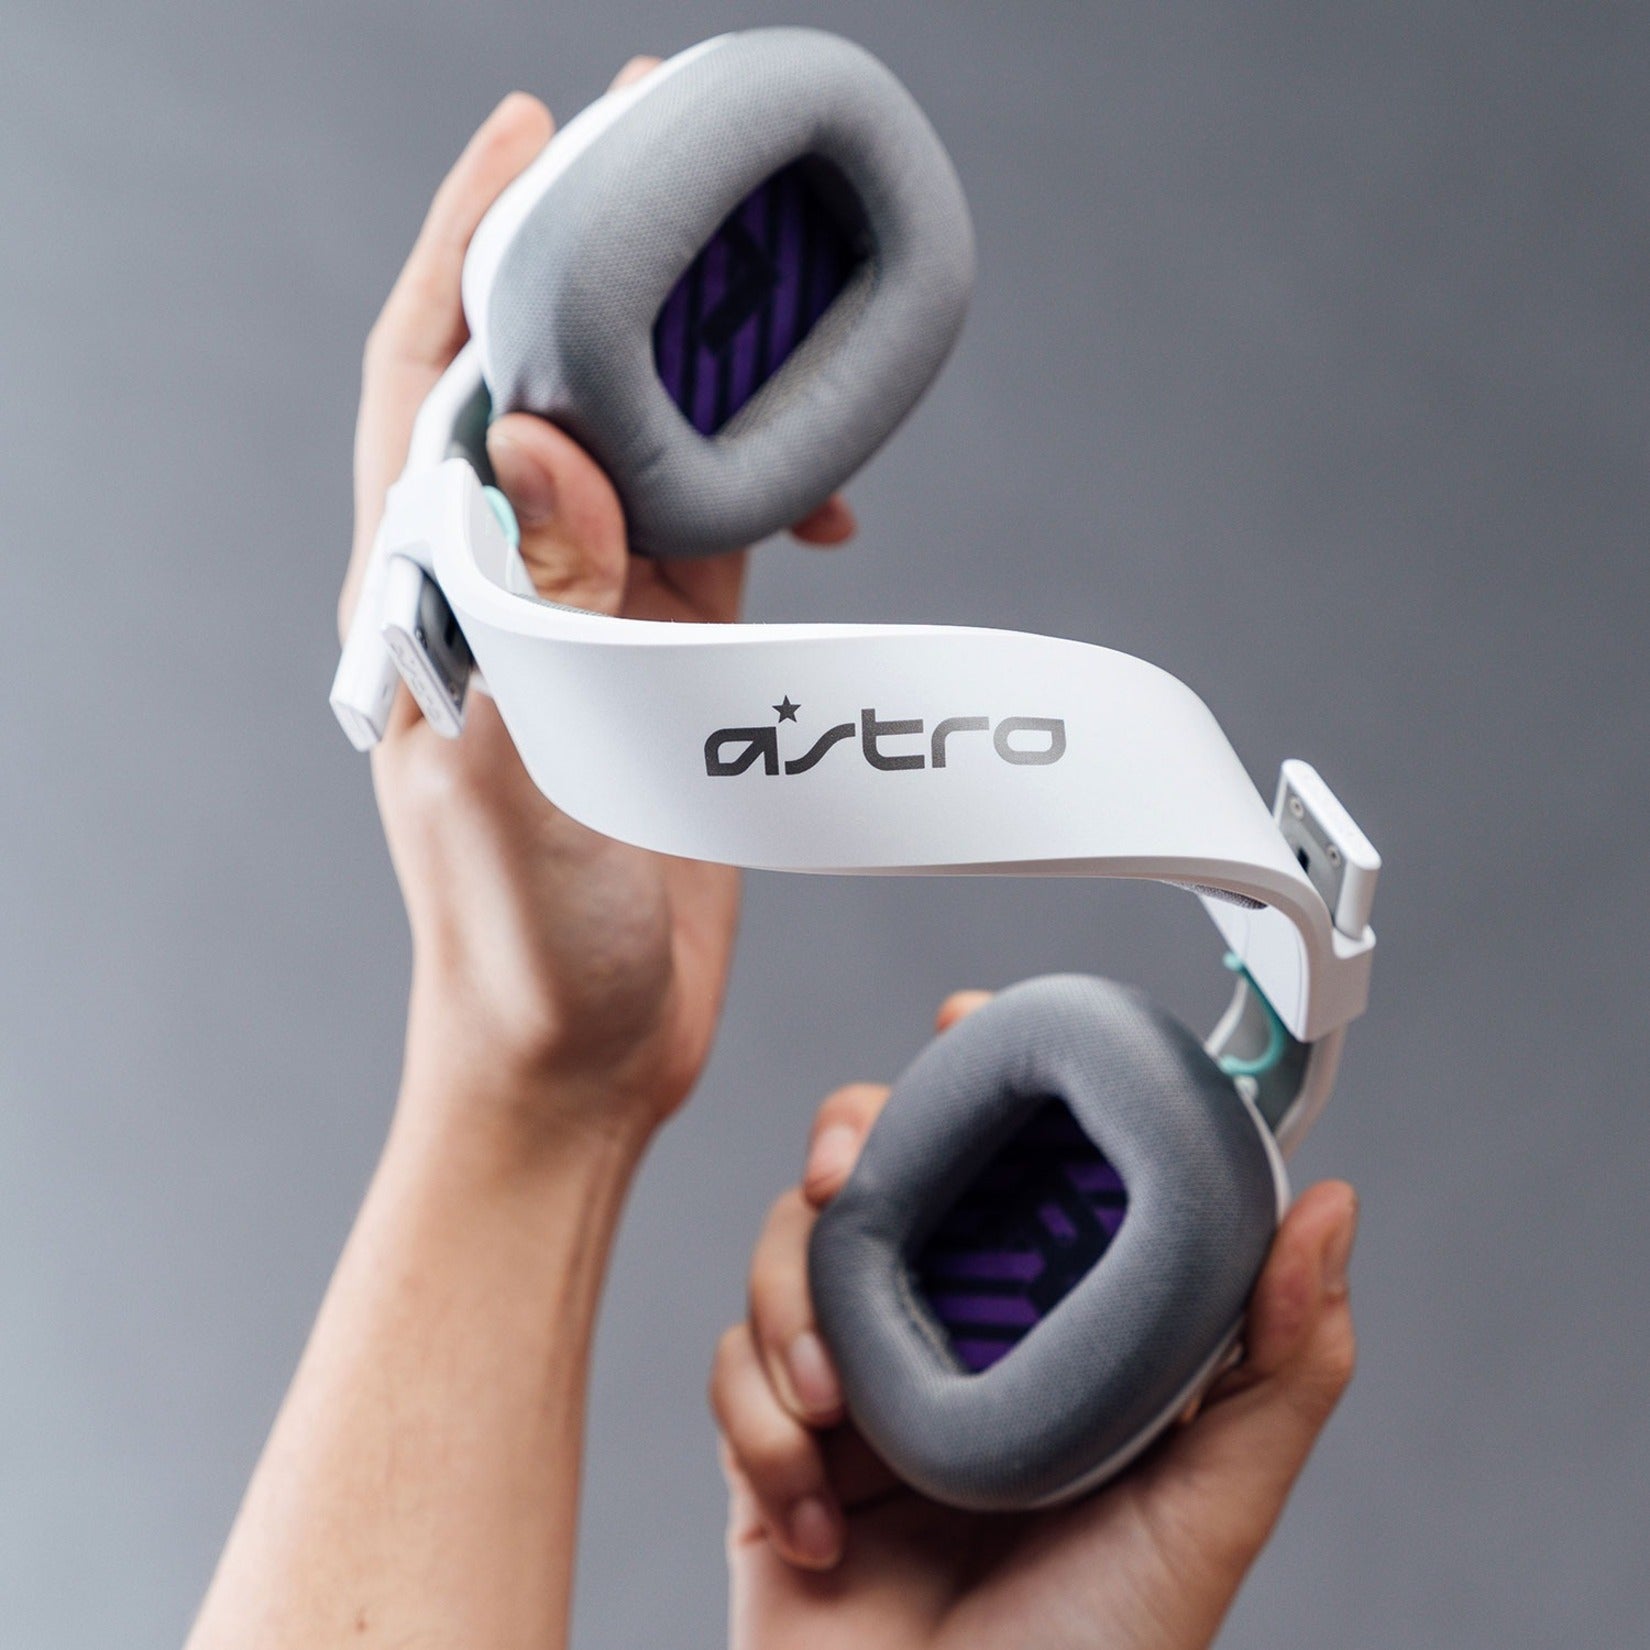 Astro 939-002050 A10 Headset Xbox - Weiß Robust Uni-direktionales Mikrofon Kabelgebundenes Gaming-Headset